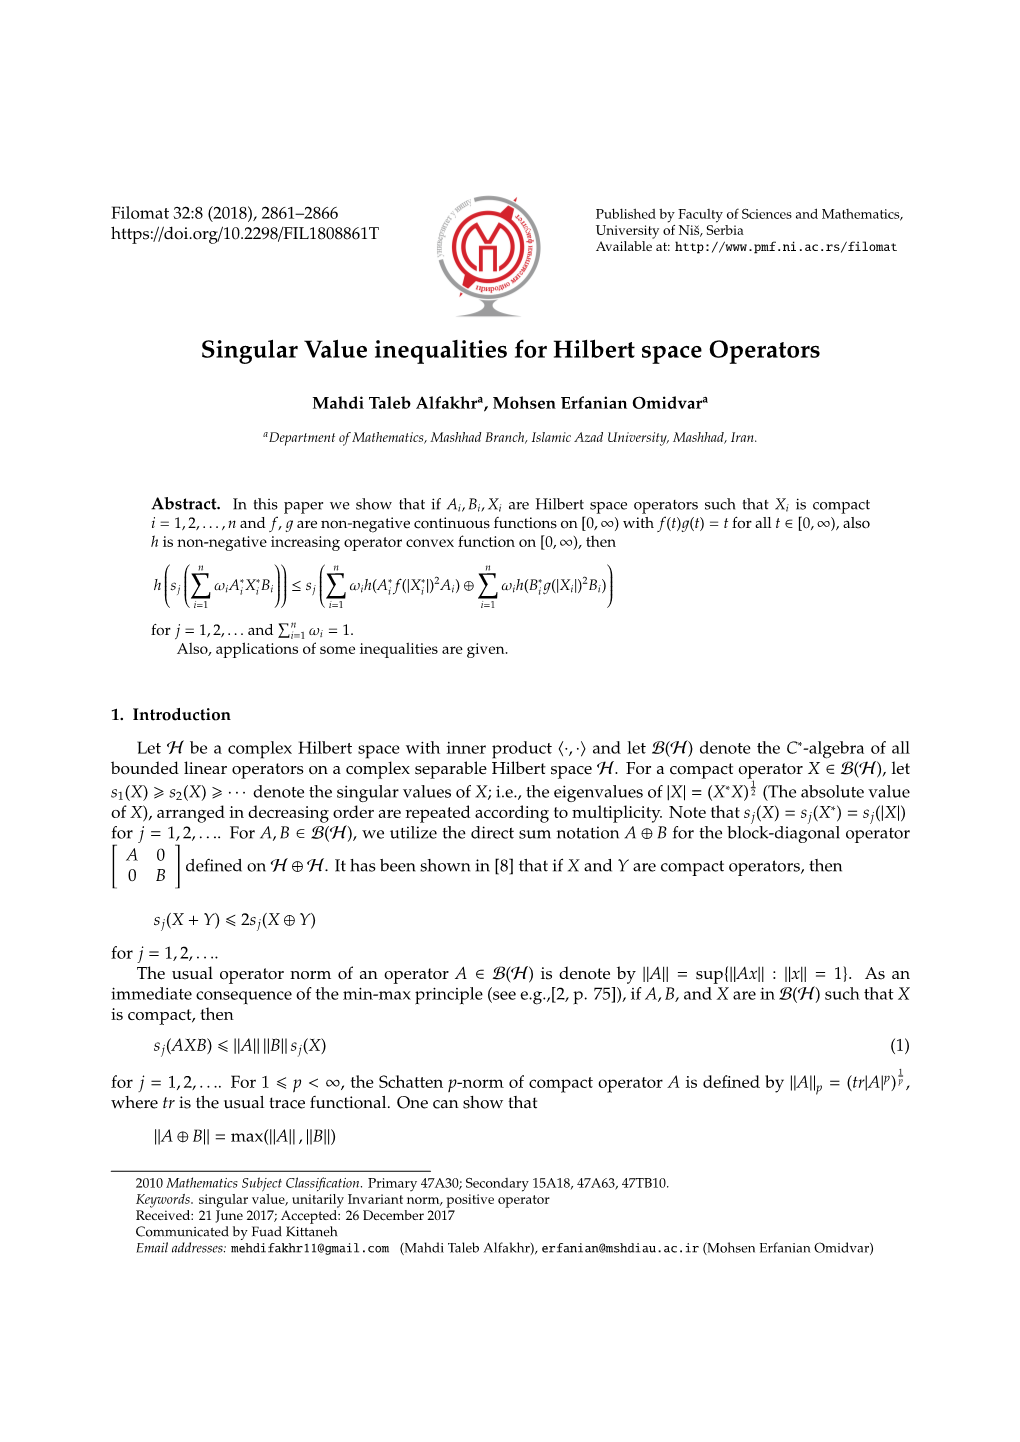 Singular Value Inequalities for Hilbert Space Operators